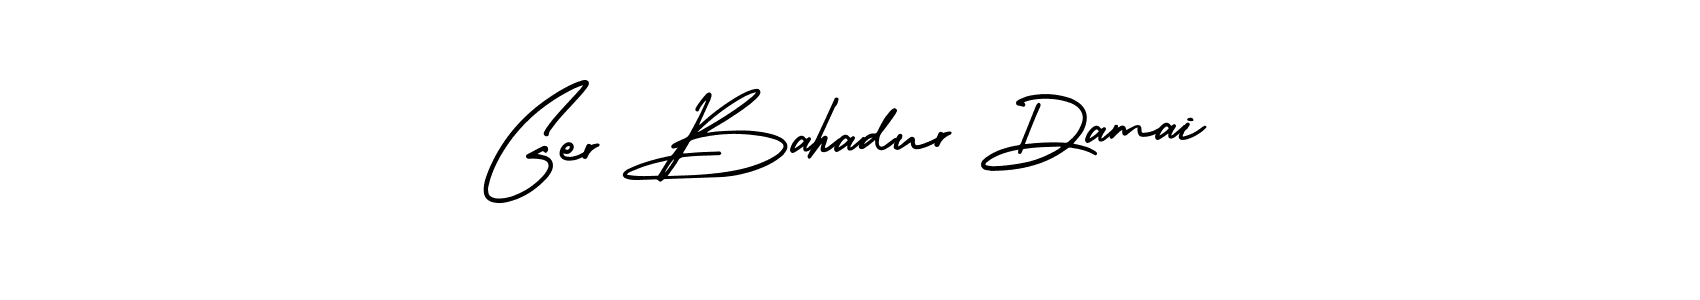 How to Draw Ger Bahadur Damai signature style? AmerikaSignatureDemo-Regular is a latest design signature styles for name Ger Bahadur Damai. Ger Bahadur Damai signature style 3 images and pictures png